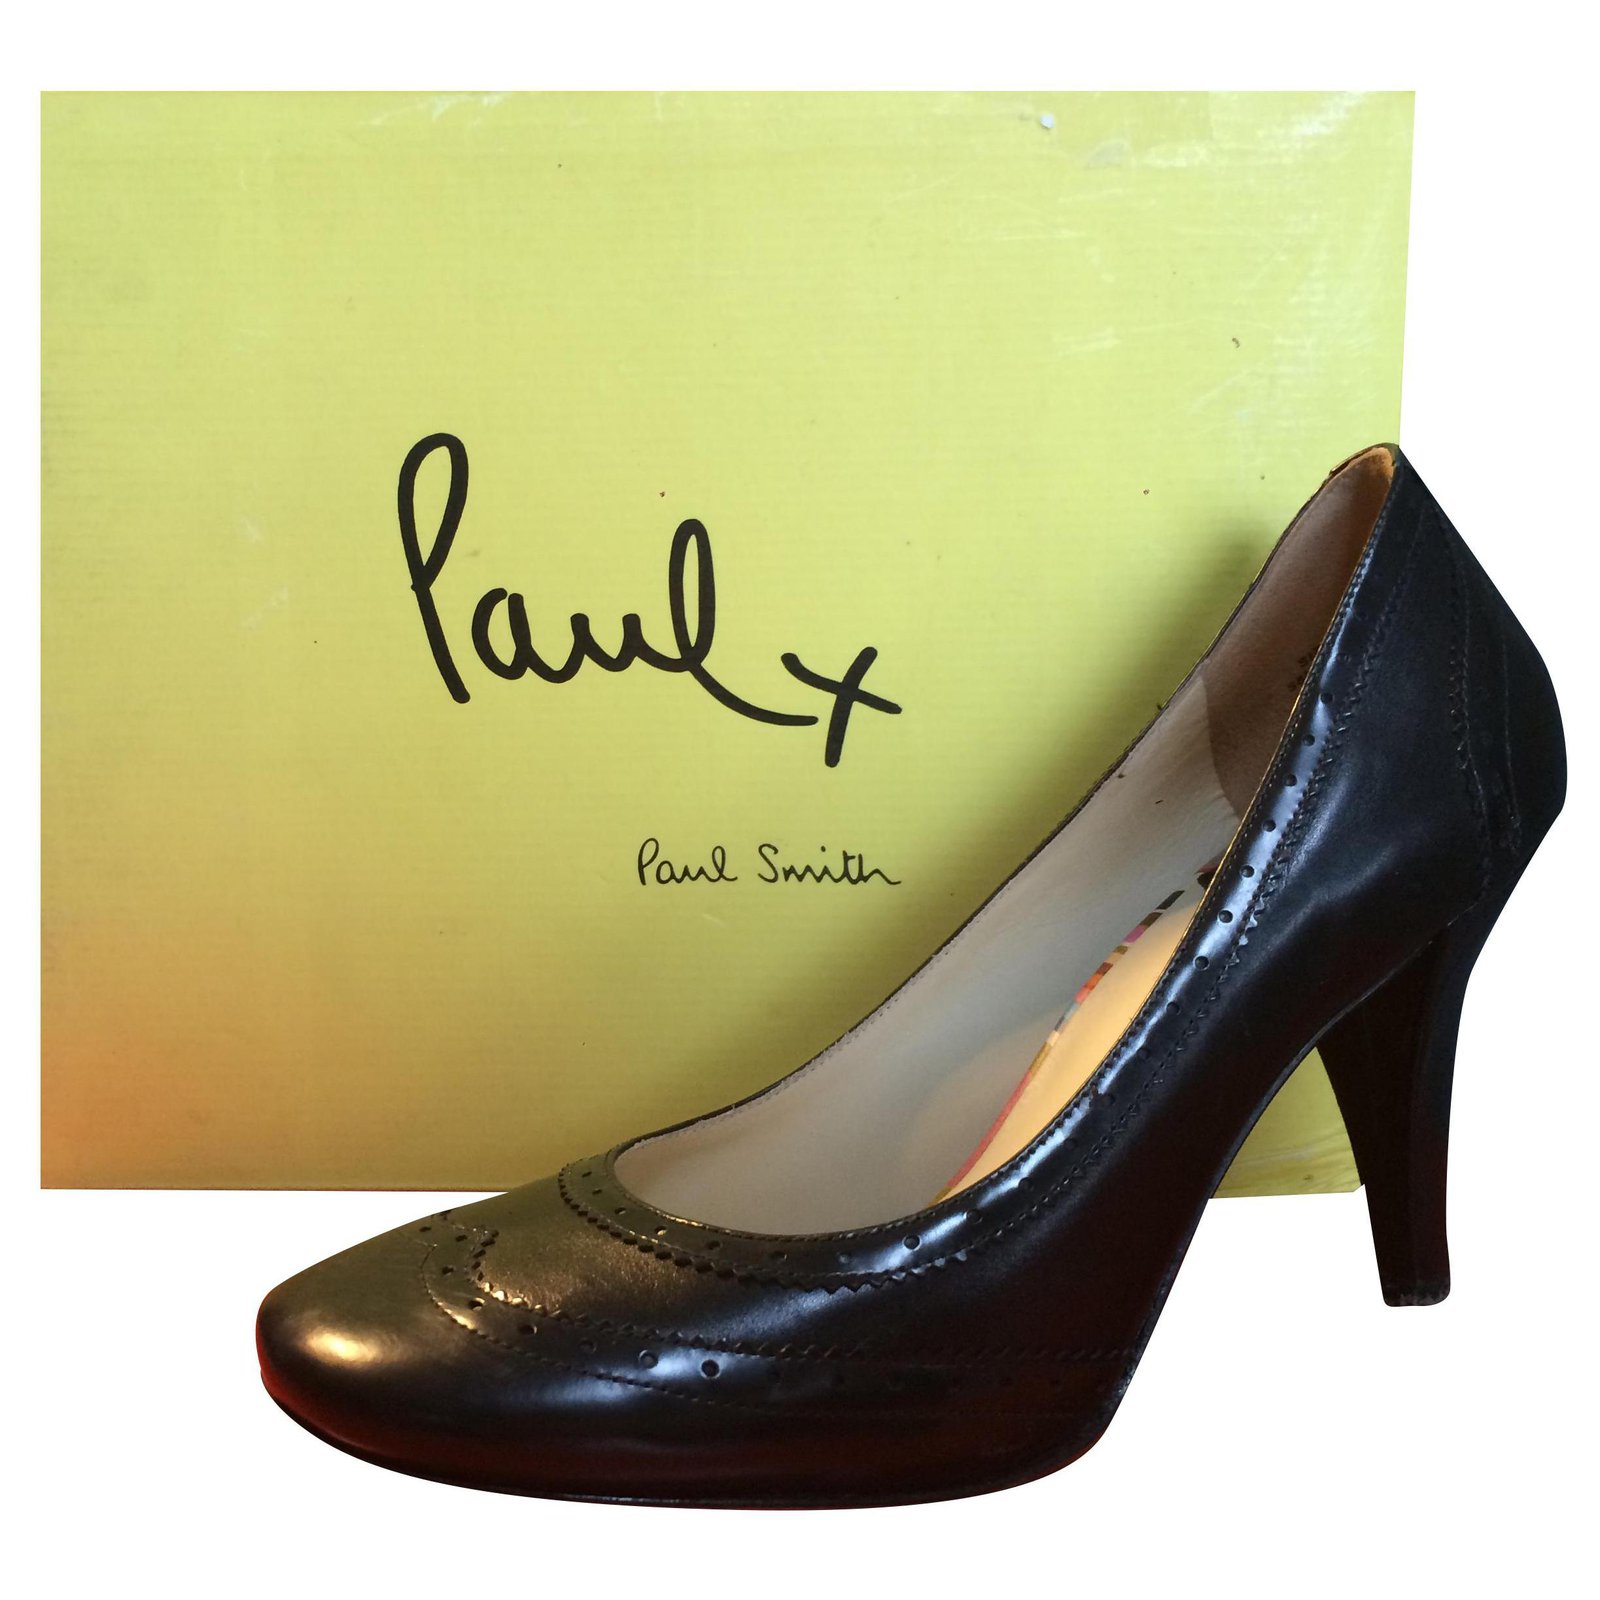 Paul Smith Paul Smith pumps Heels 